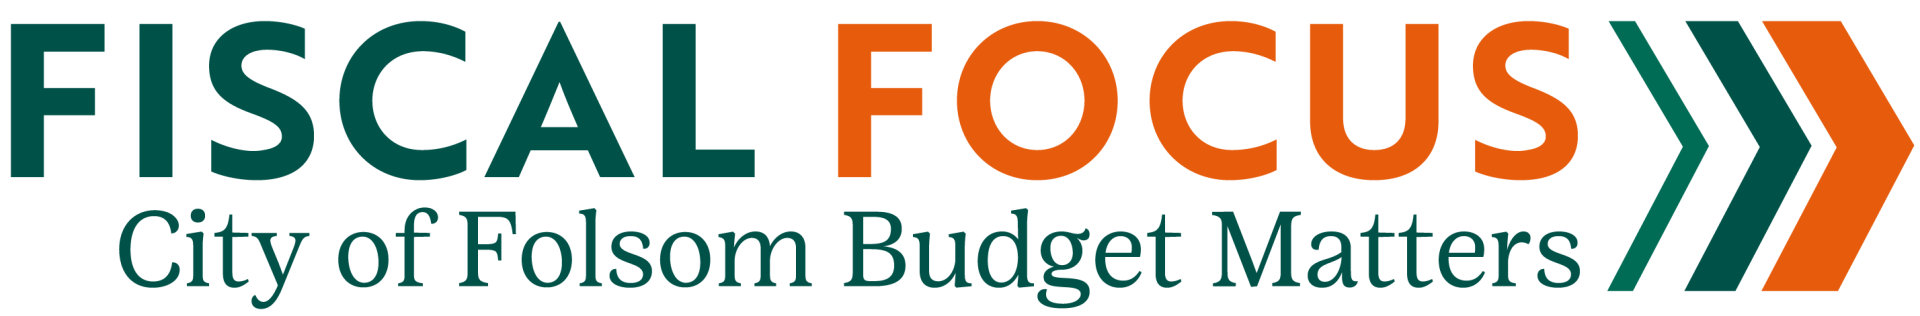 Fiscal Focus Logo - horz